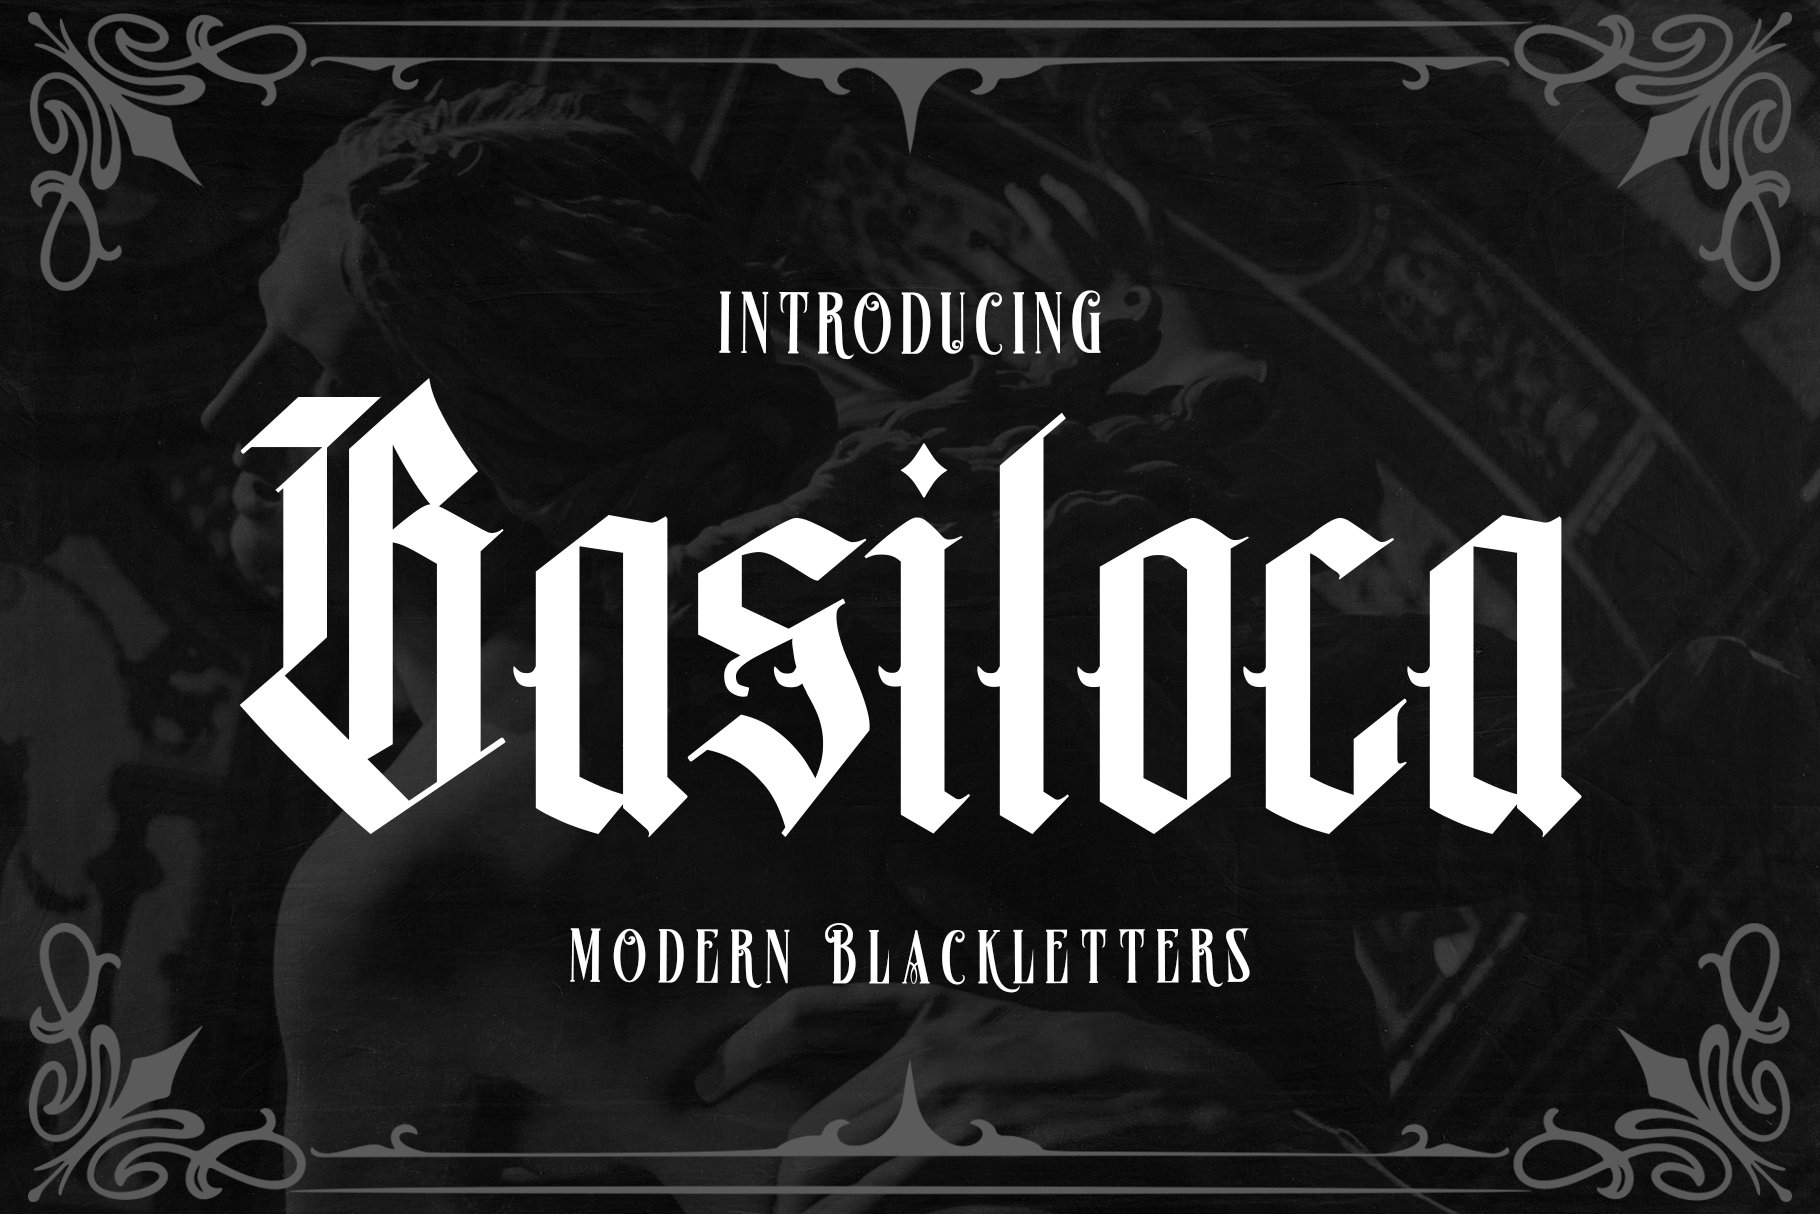 BASILOCA Modern Blackletter cover image.